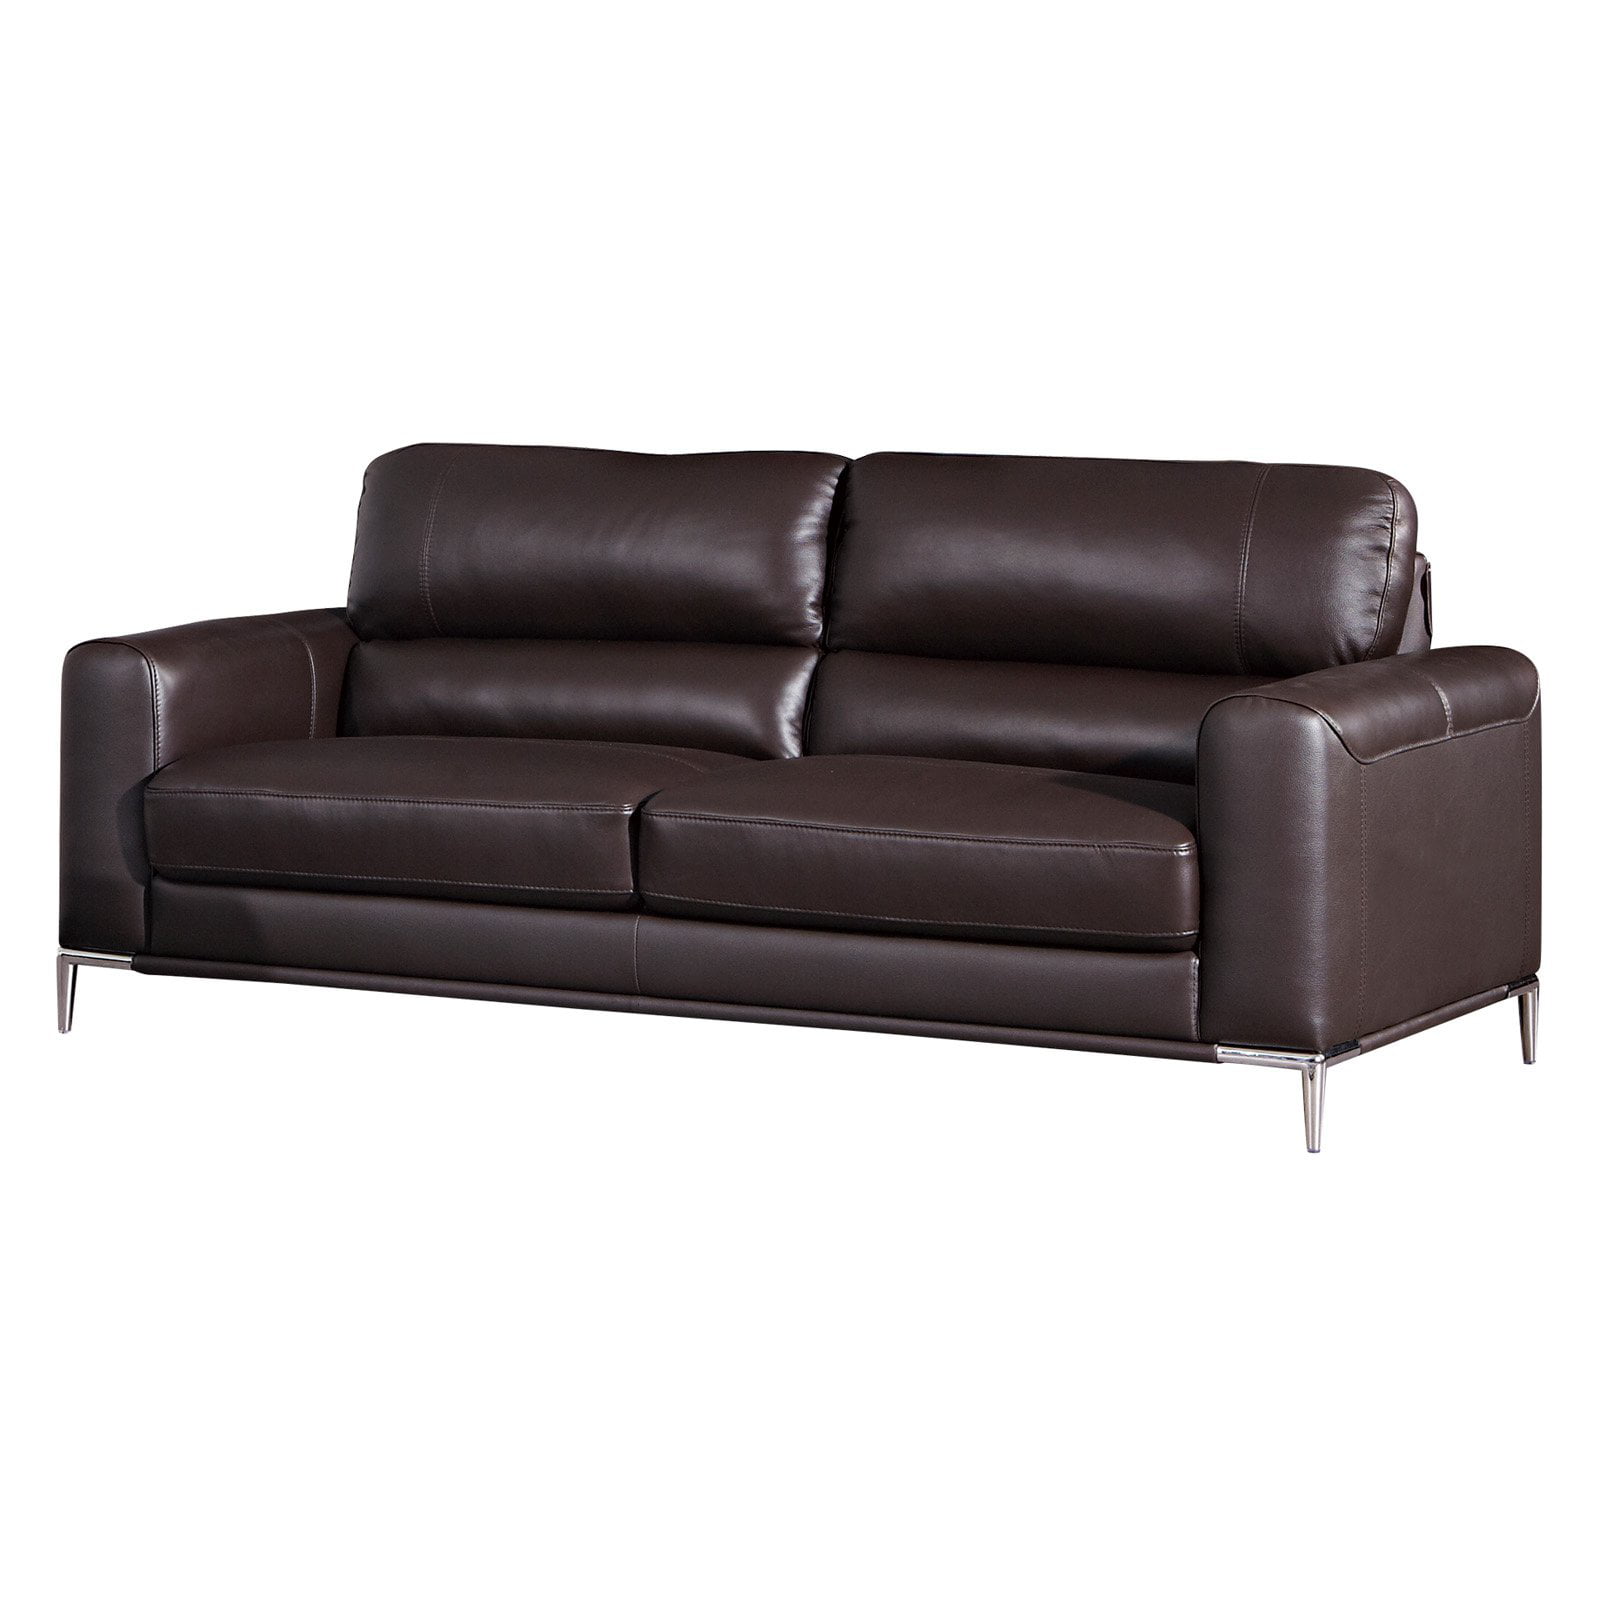 American Eagle Furniture Rodeo Leather Sofa